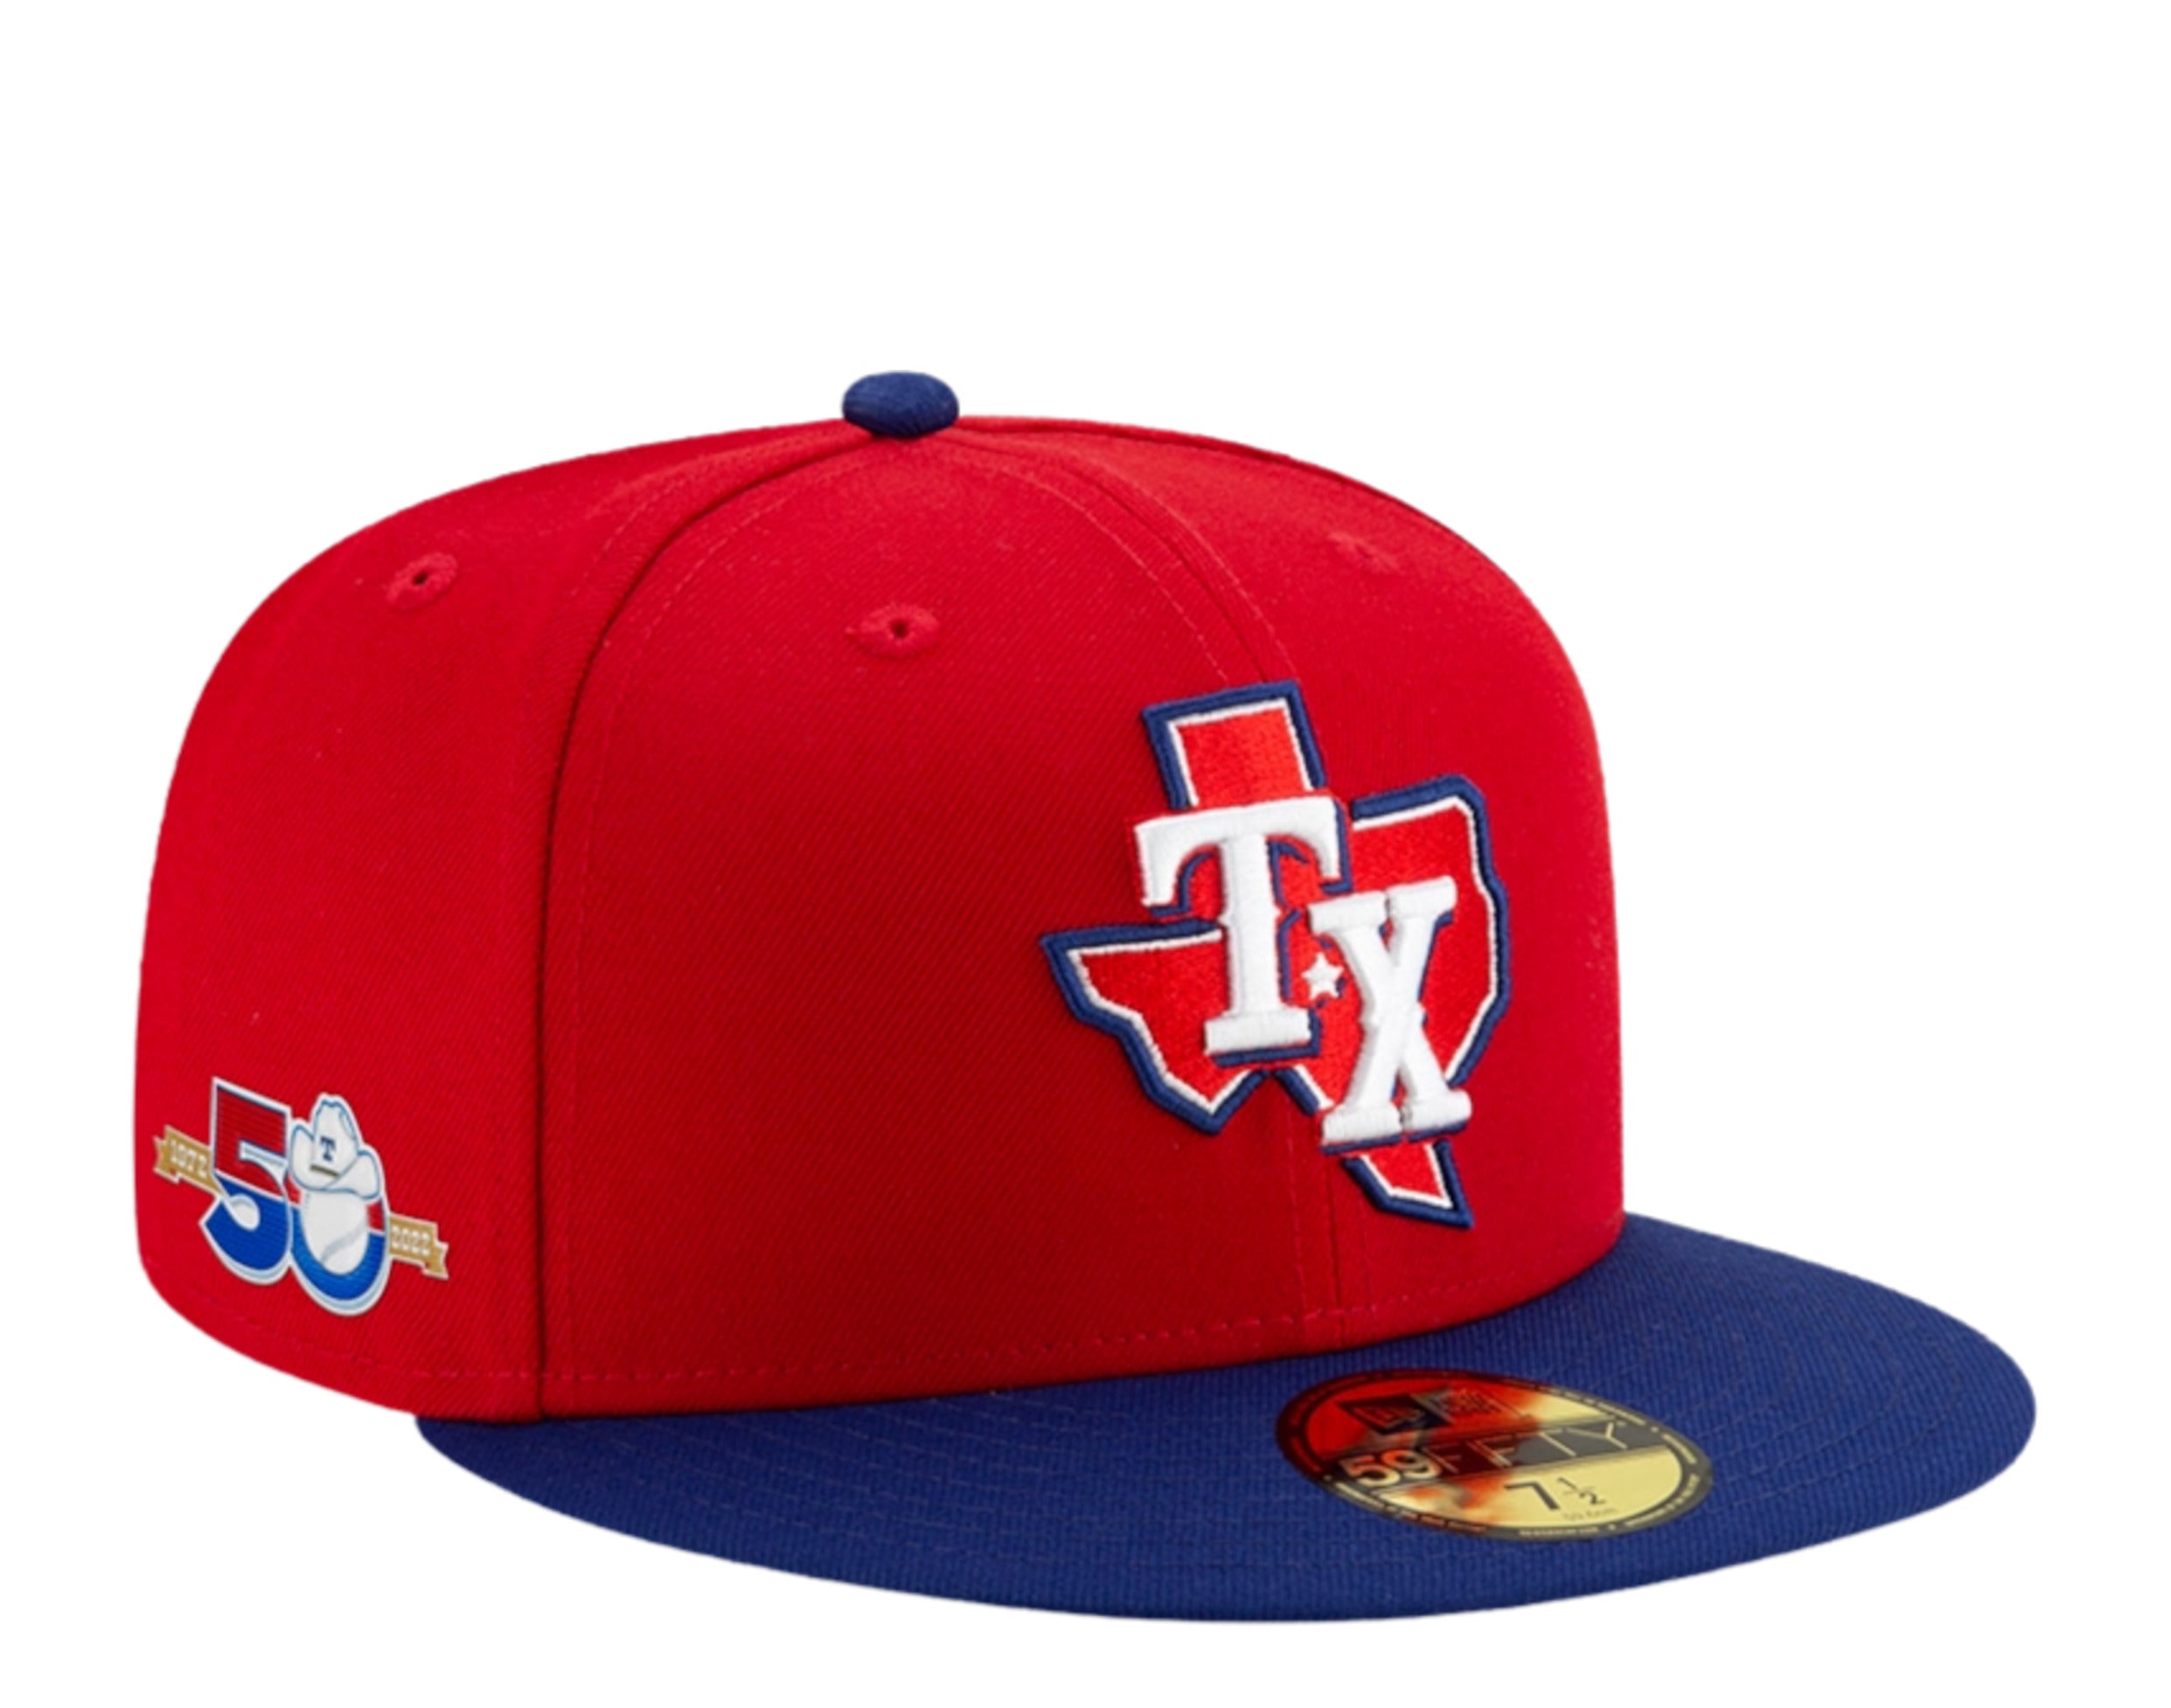 Black Texas Rangers Final Season 59fifty New Era Fitted Hat